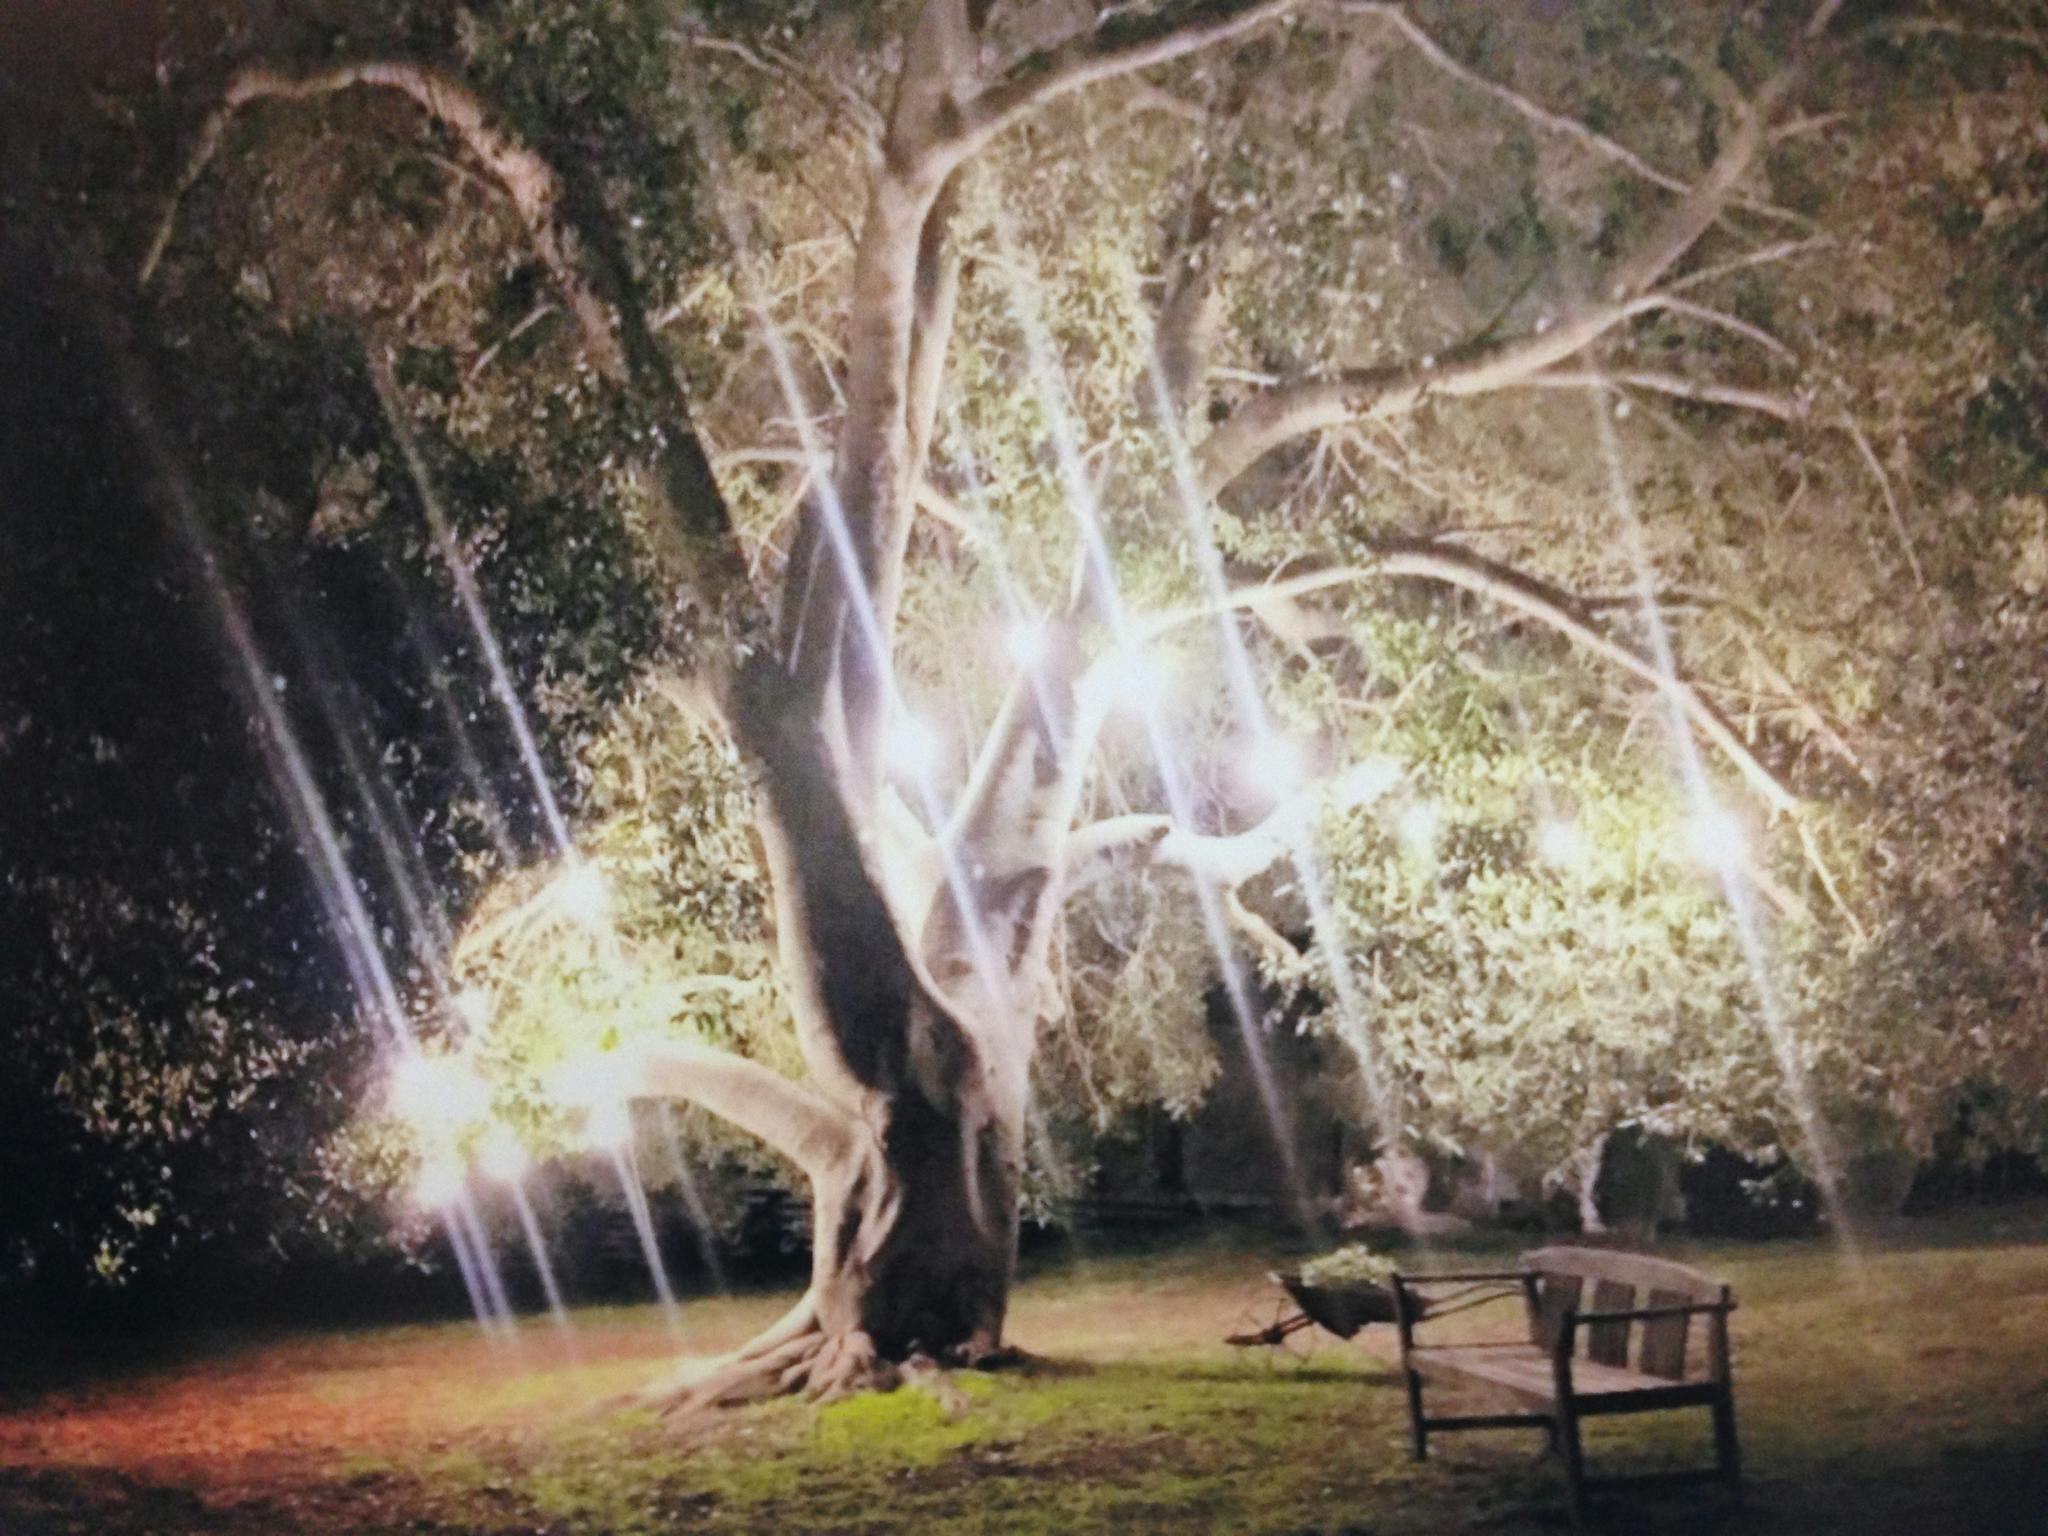 Taminick Cellars'  Fig tree looking magical at night